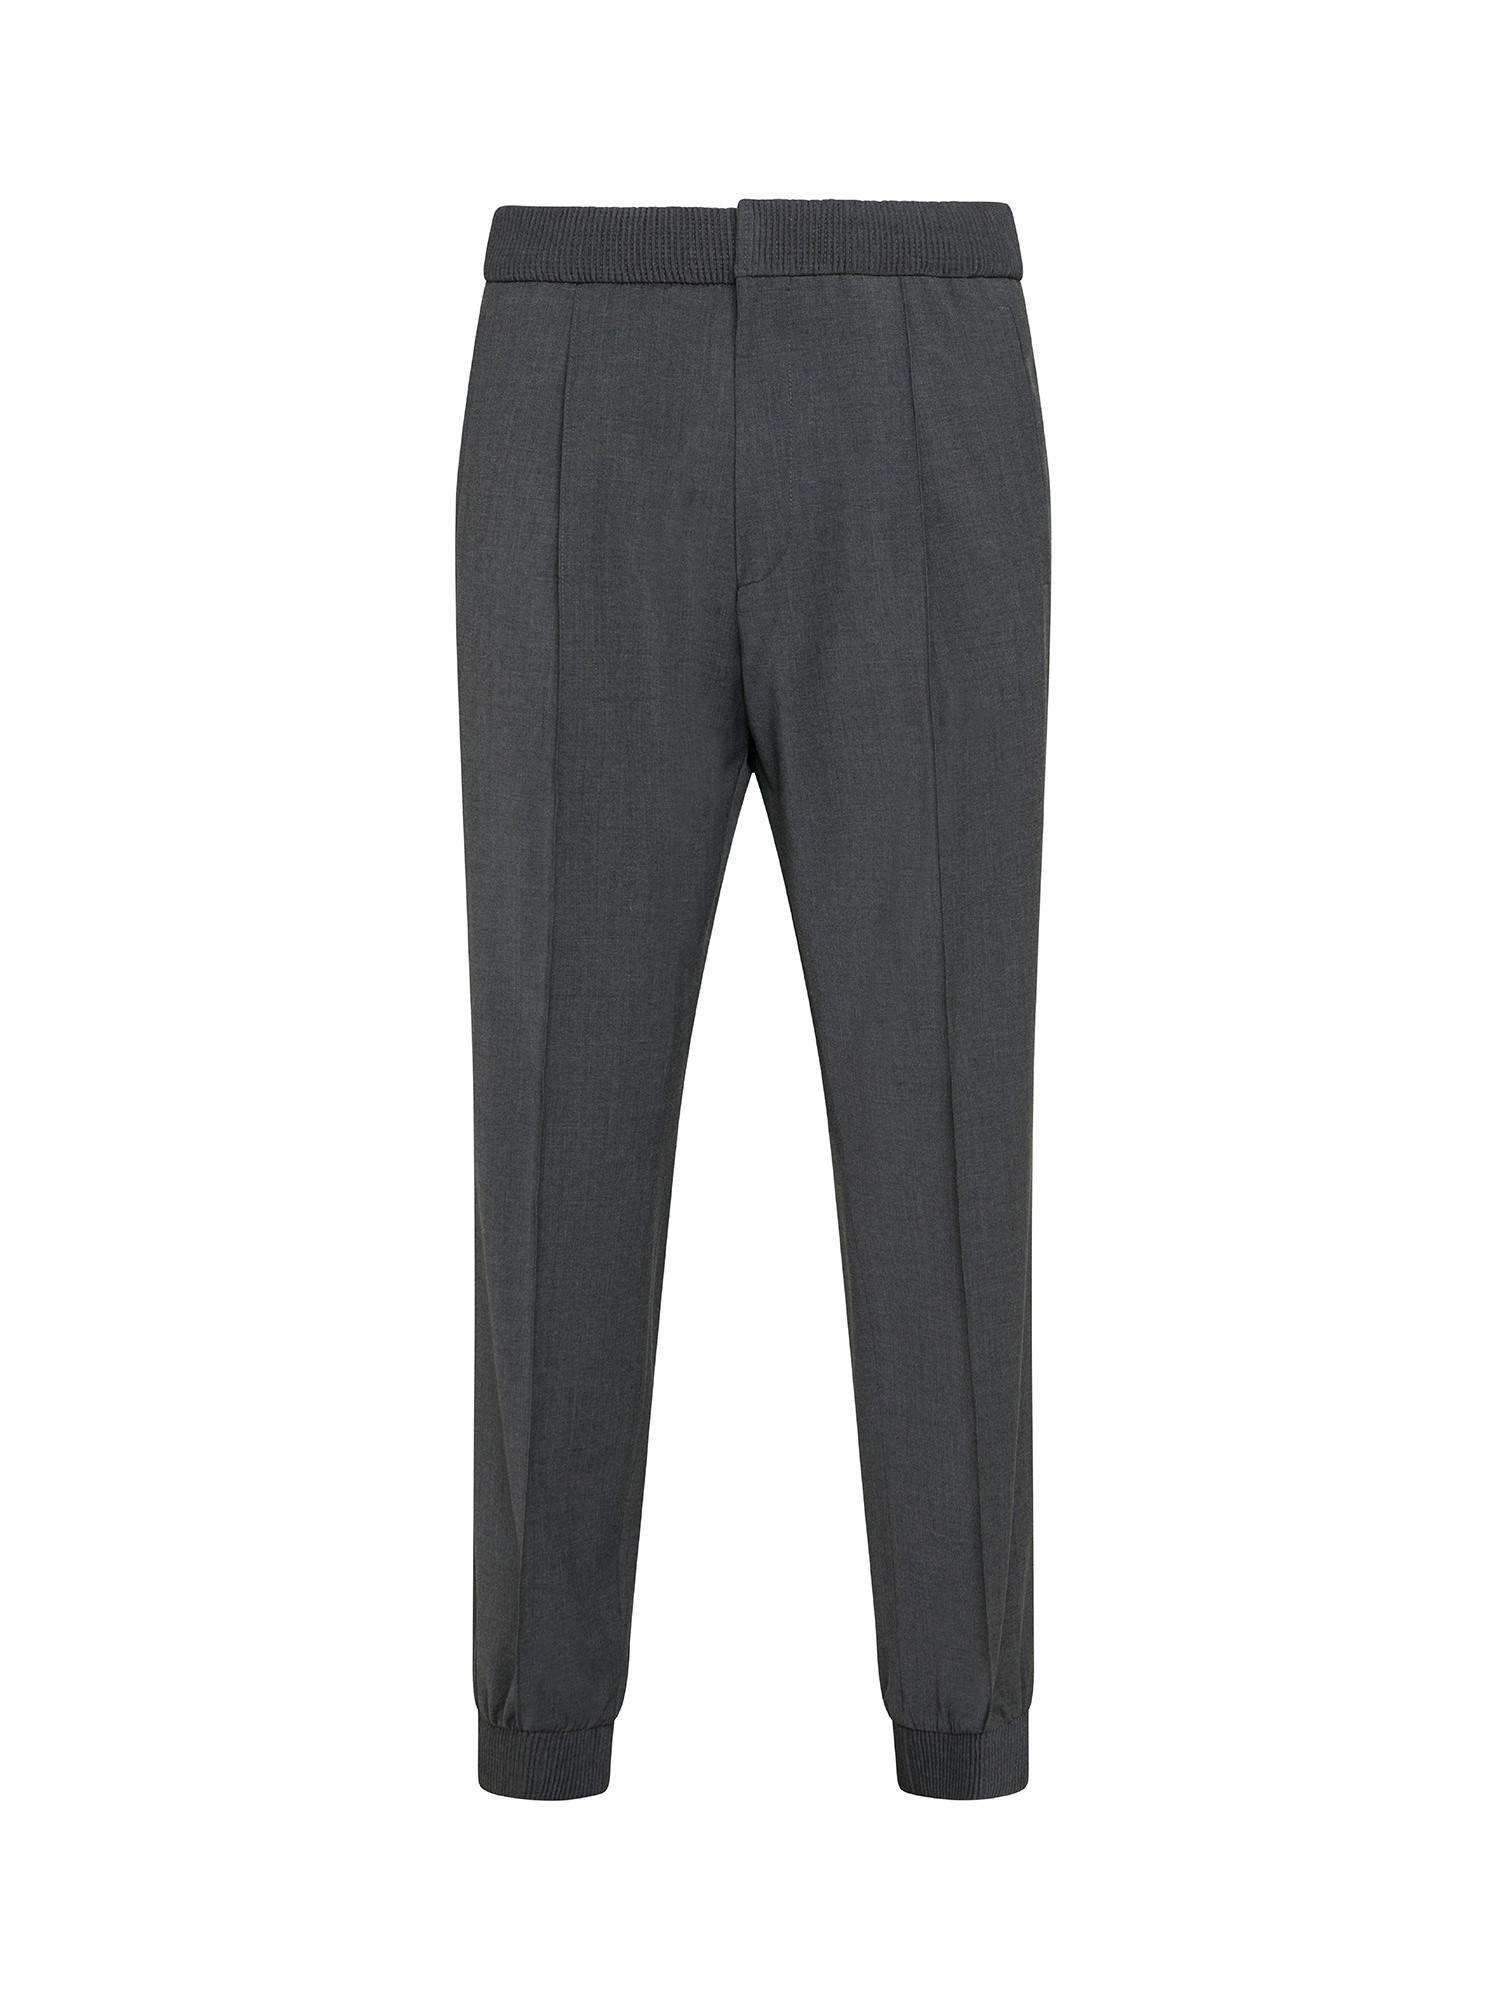 Hugo - Pantaloni con elastico, Grigio scuro, large image number 0